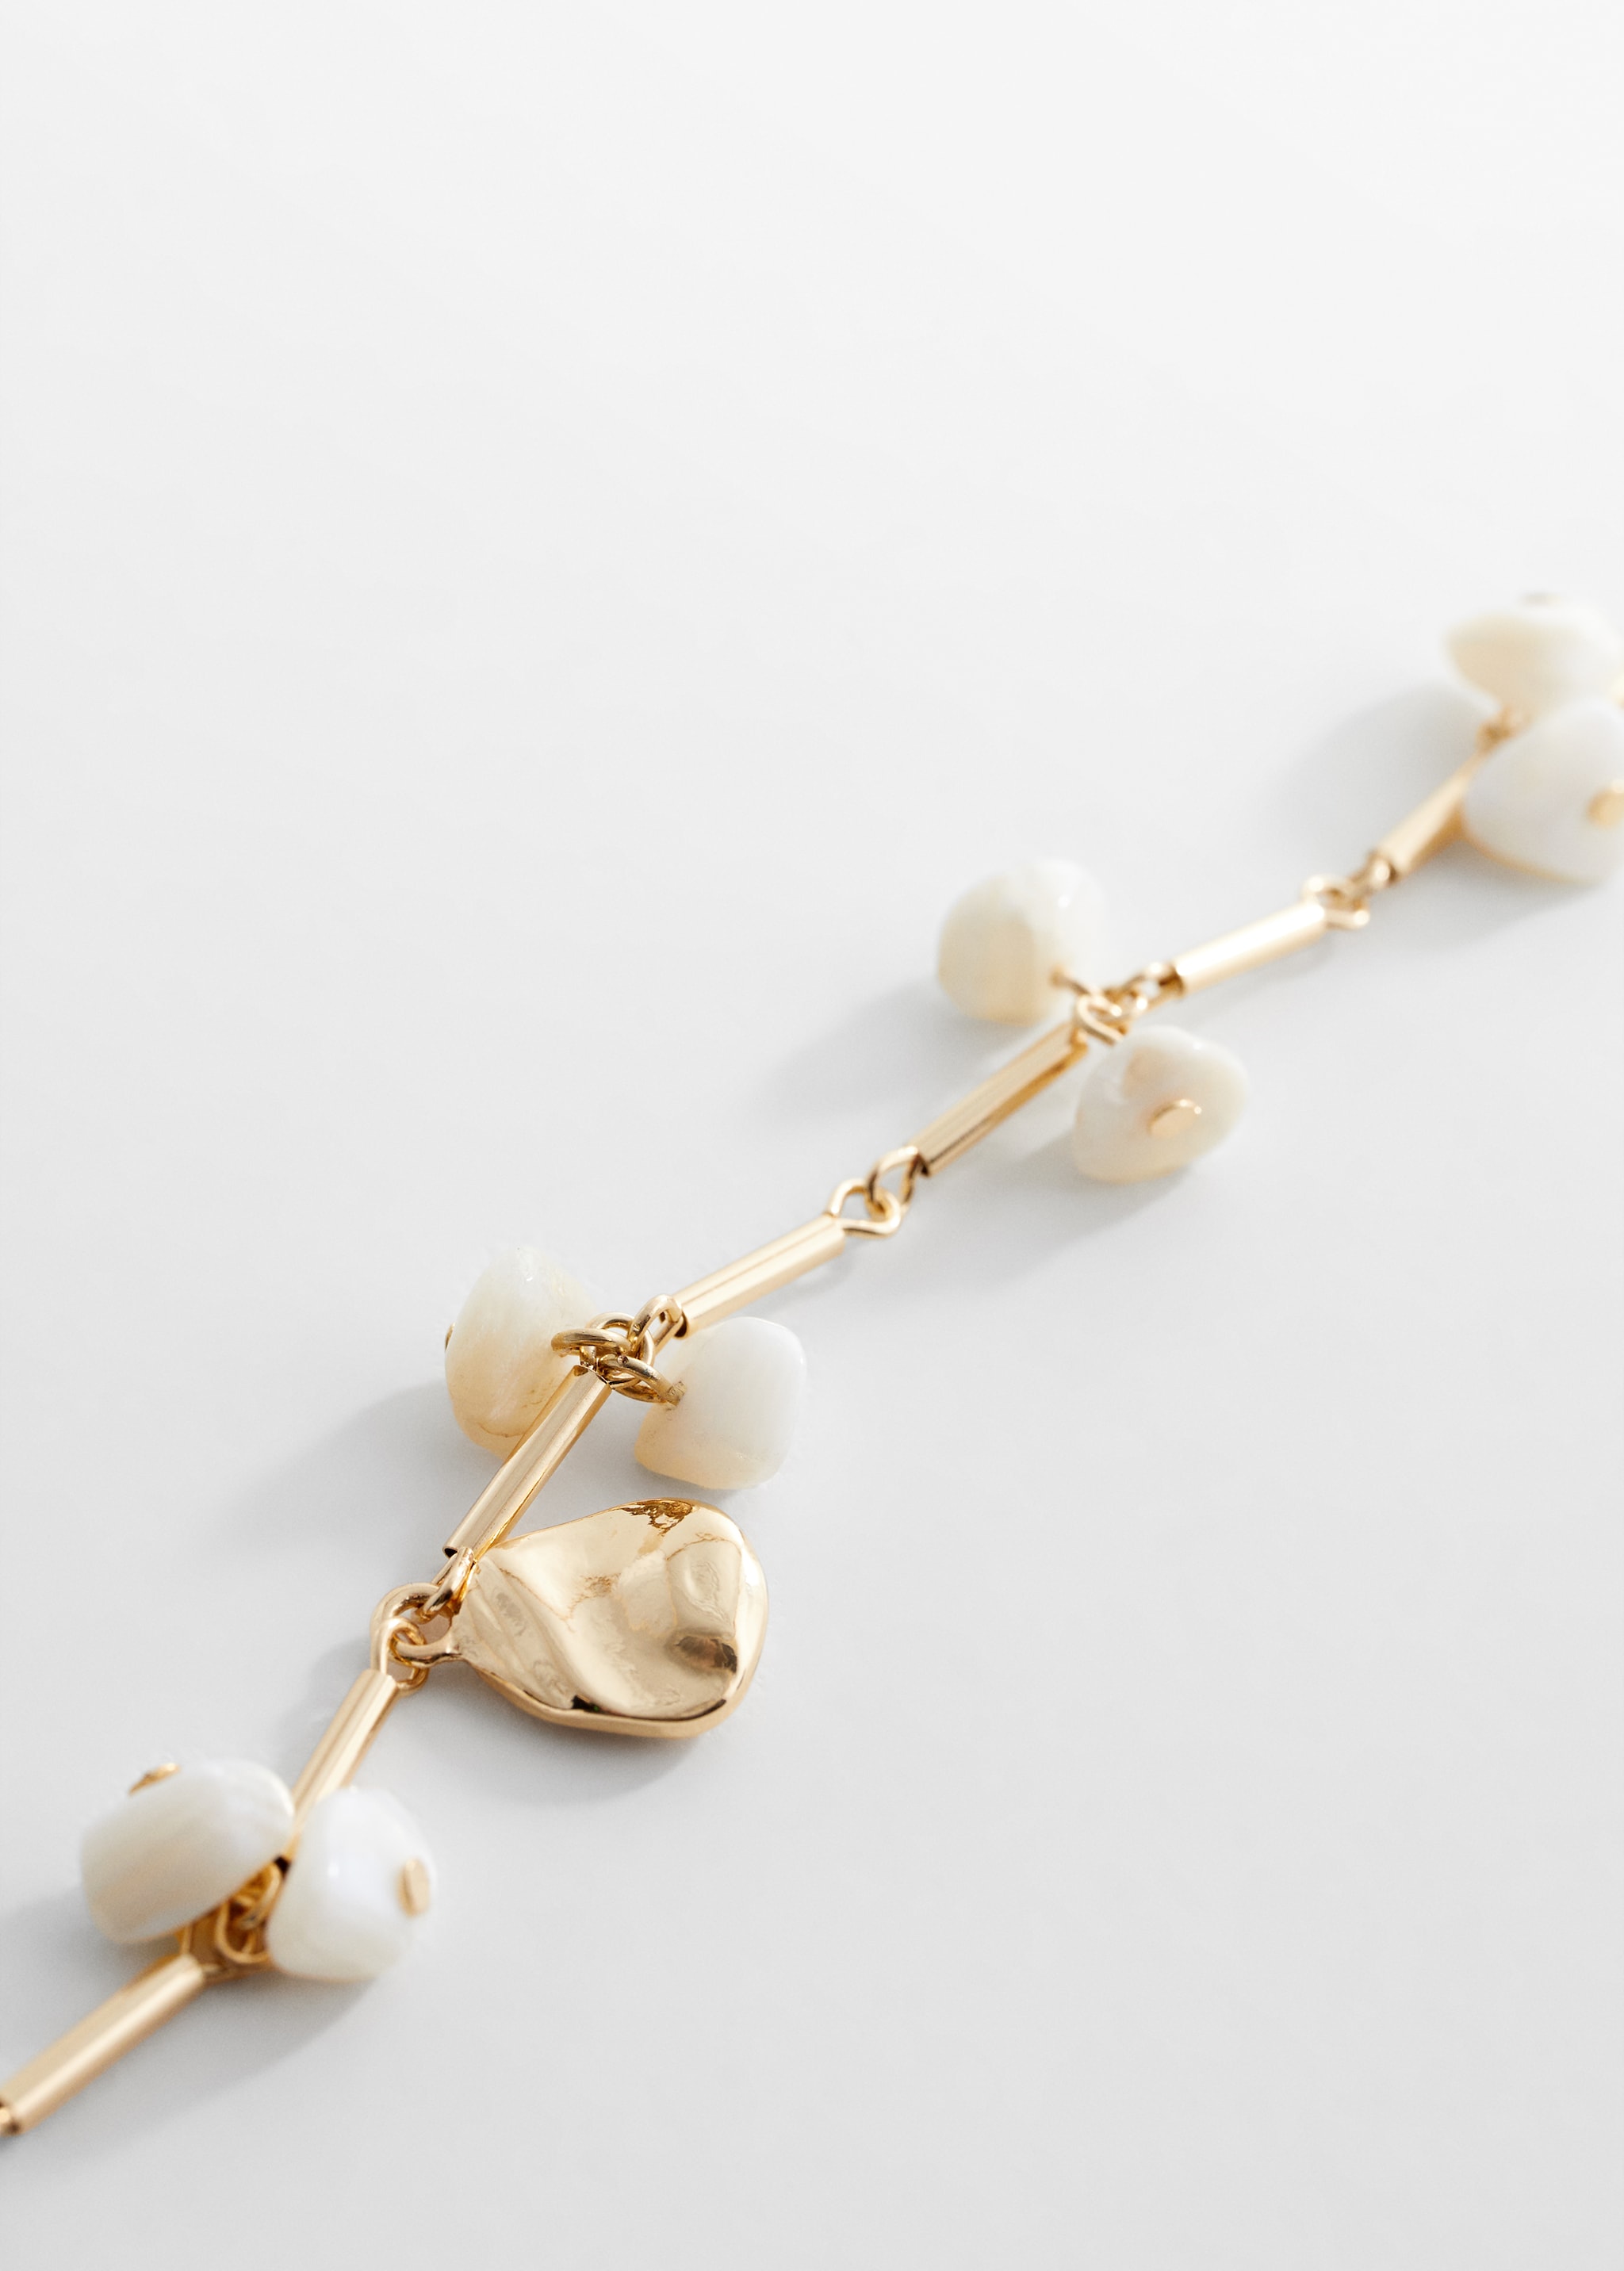 Shell chain necklace - Medium plane